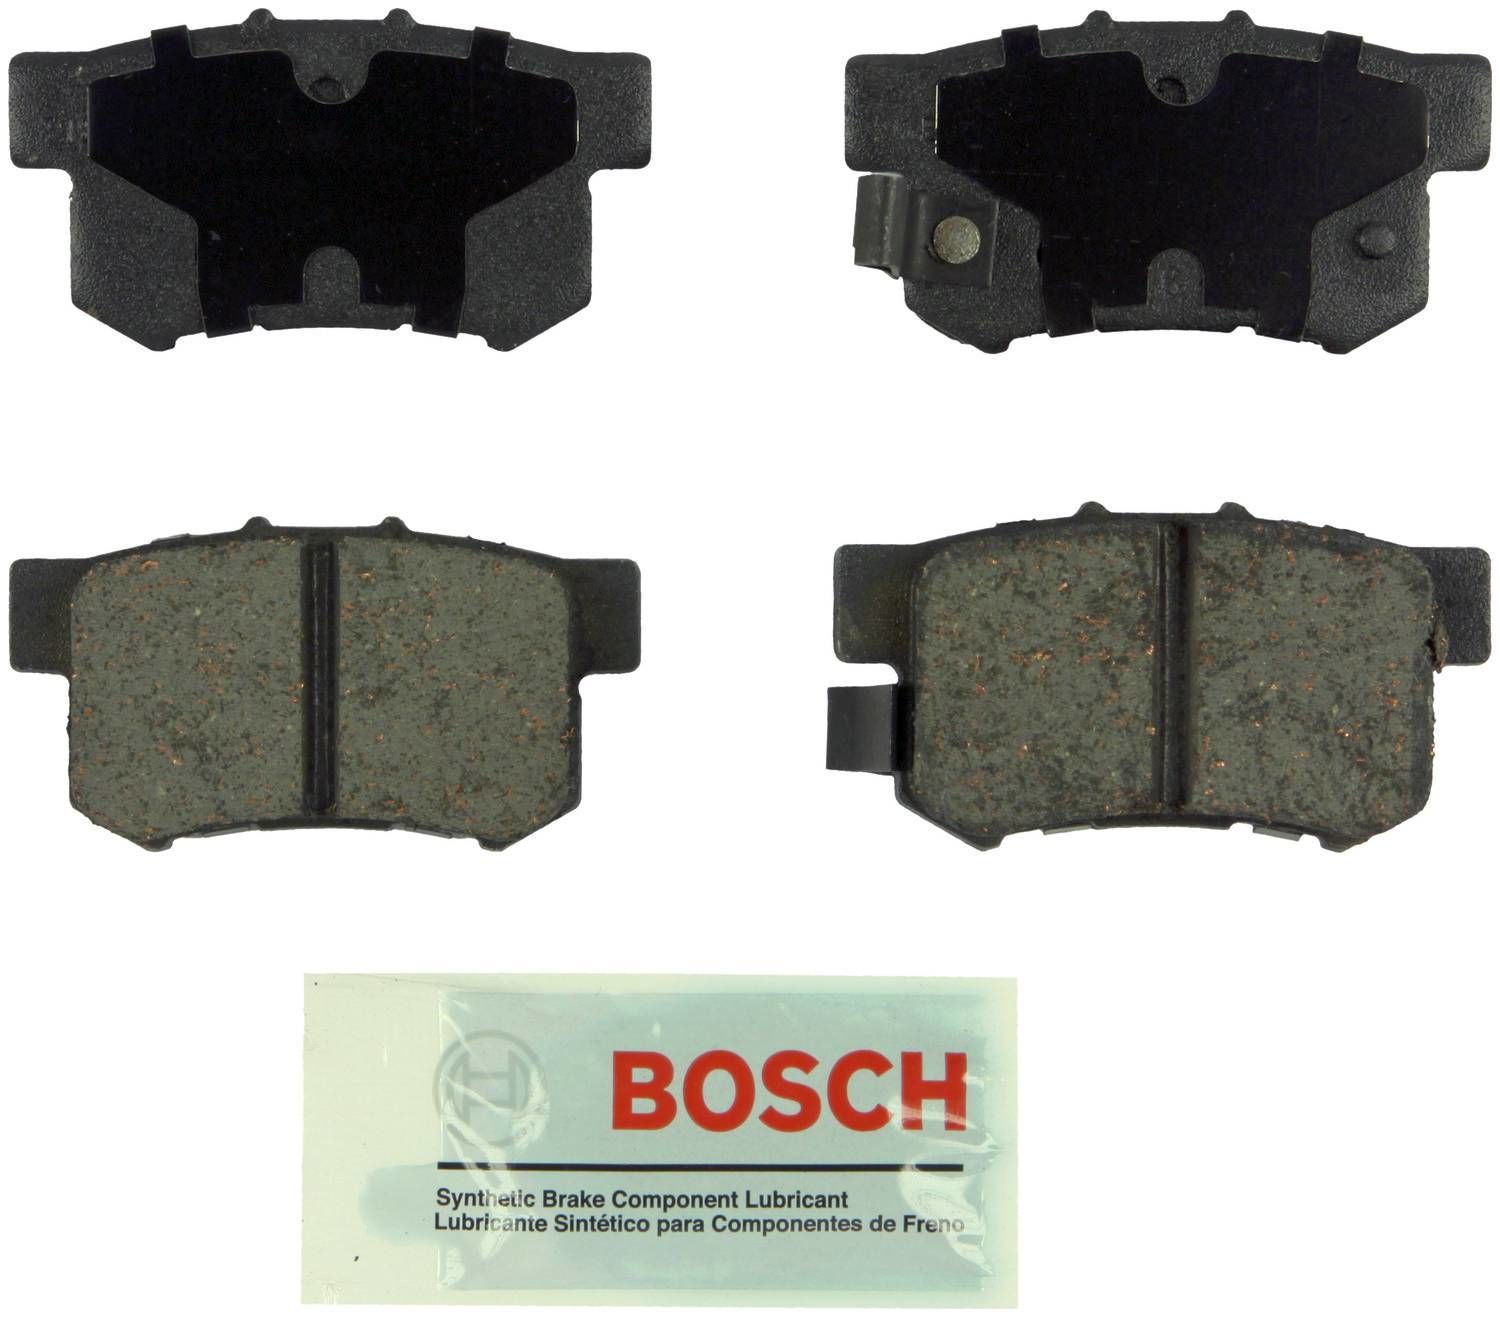 BOSCH BRAKE - Bosch Blue Ceramic Brake Pads (Rear) - BQC BE536